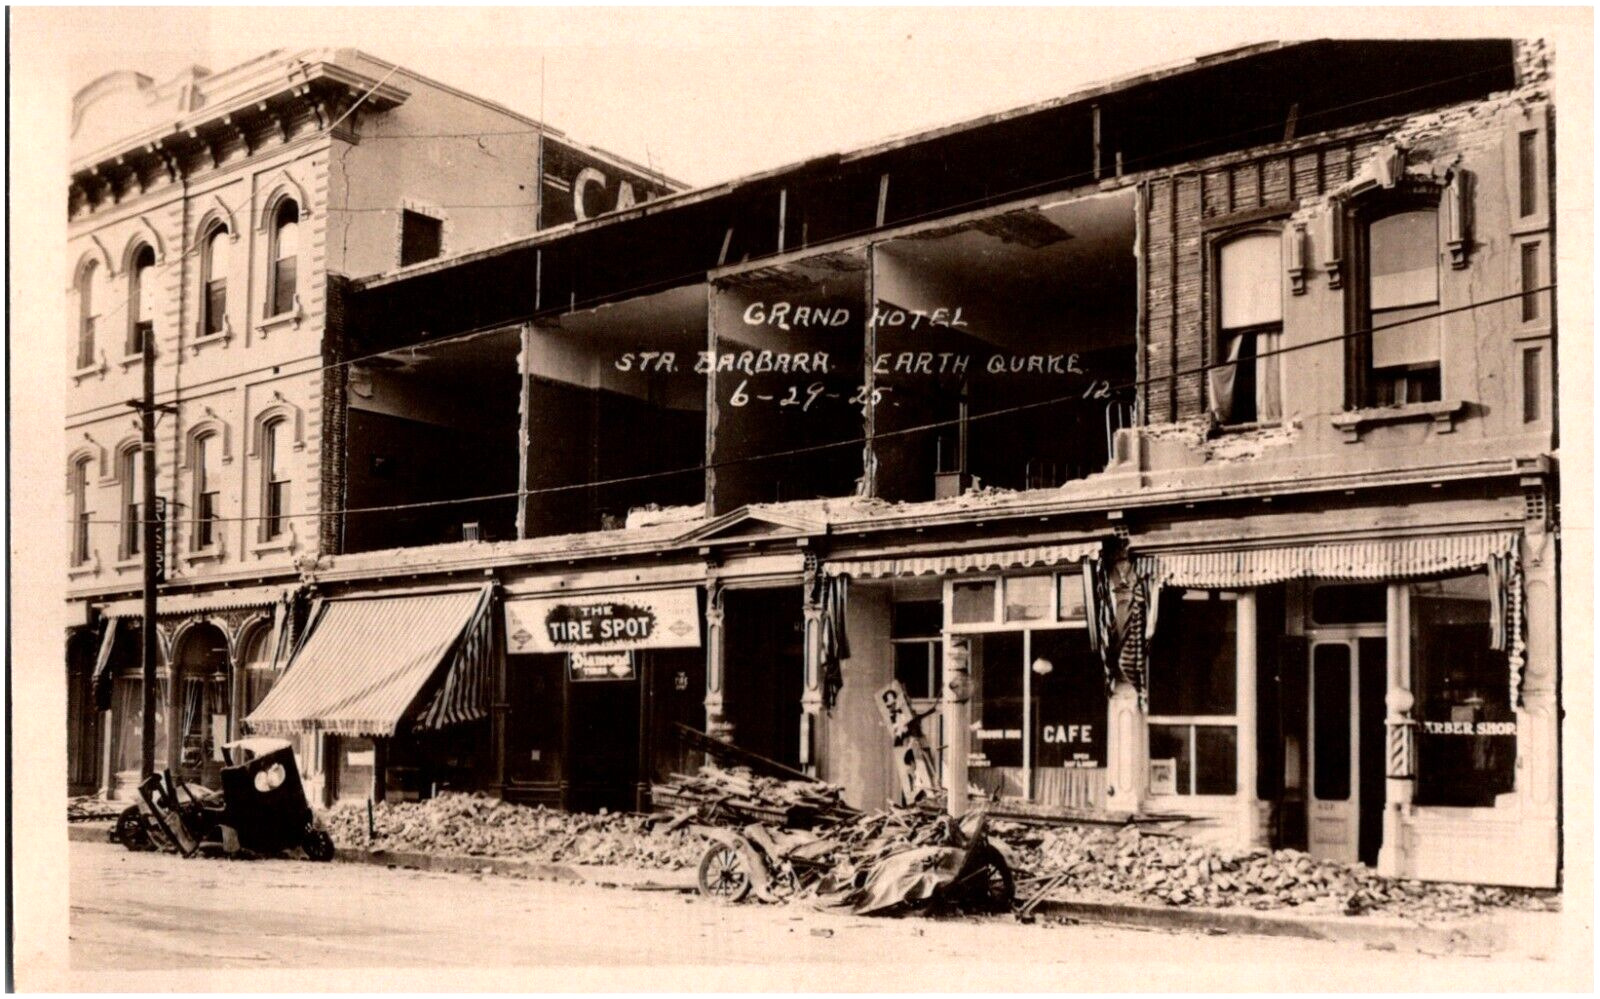 Grand Hotel Ruins Santa Barbara Earthquake California 1925 RPPC Disaster Photo